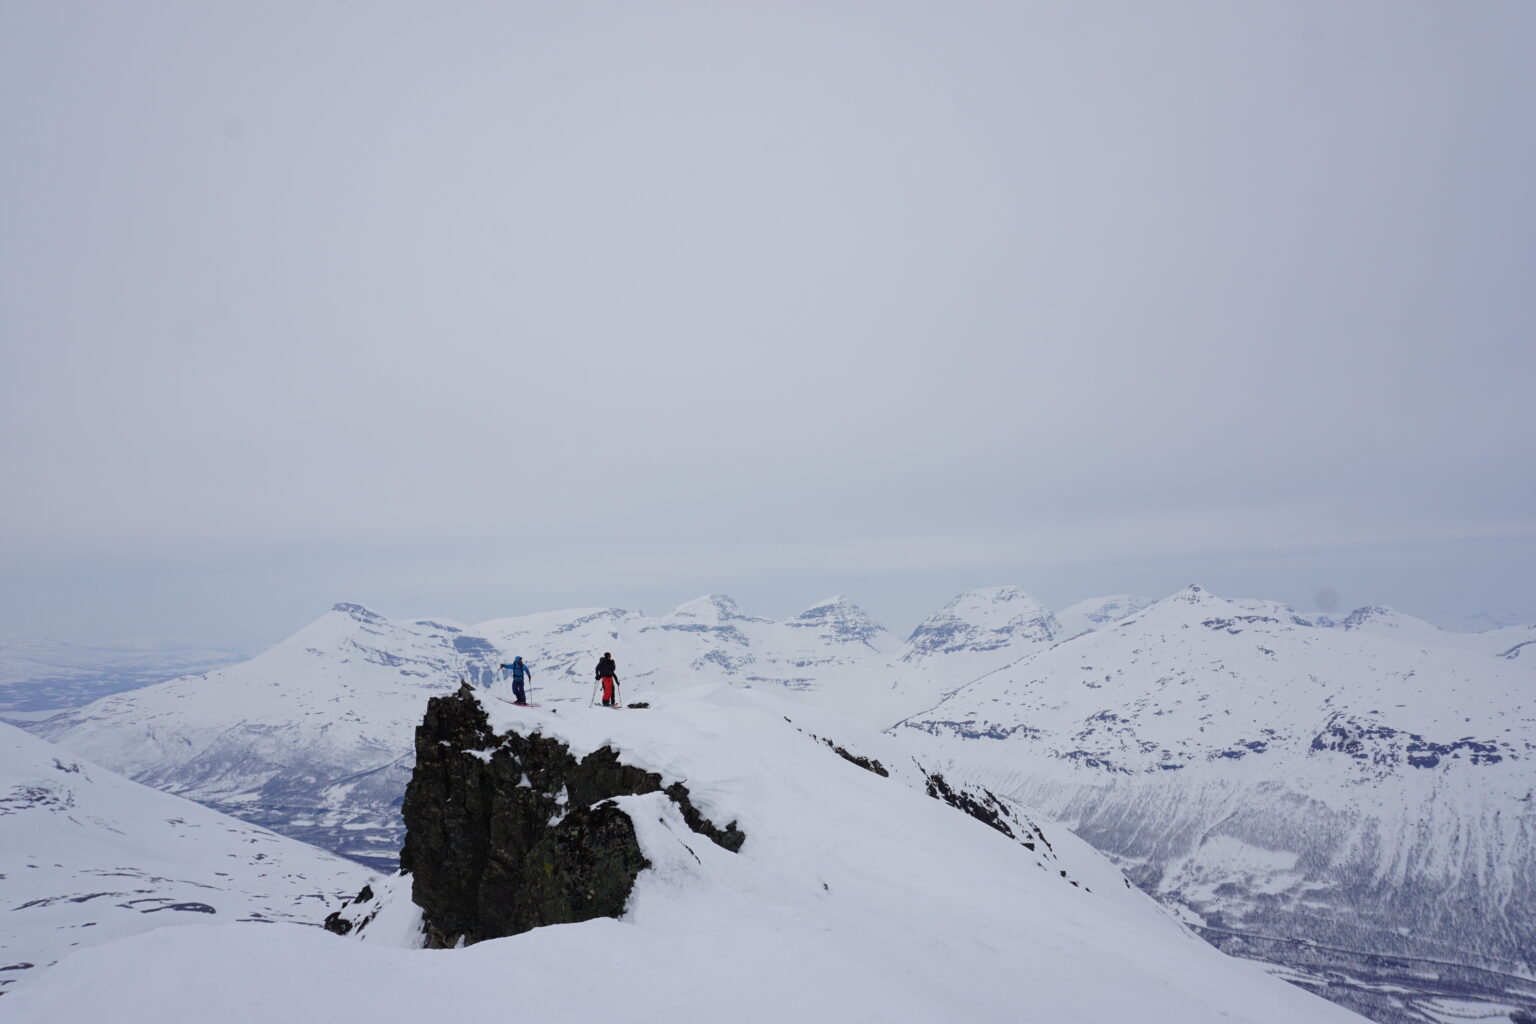 Up on the high ridge while traversing Melkefjellet and Istinden Ridge